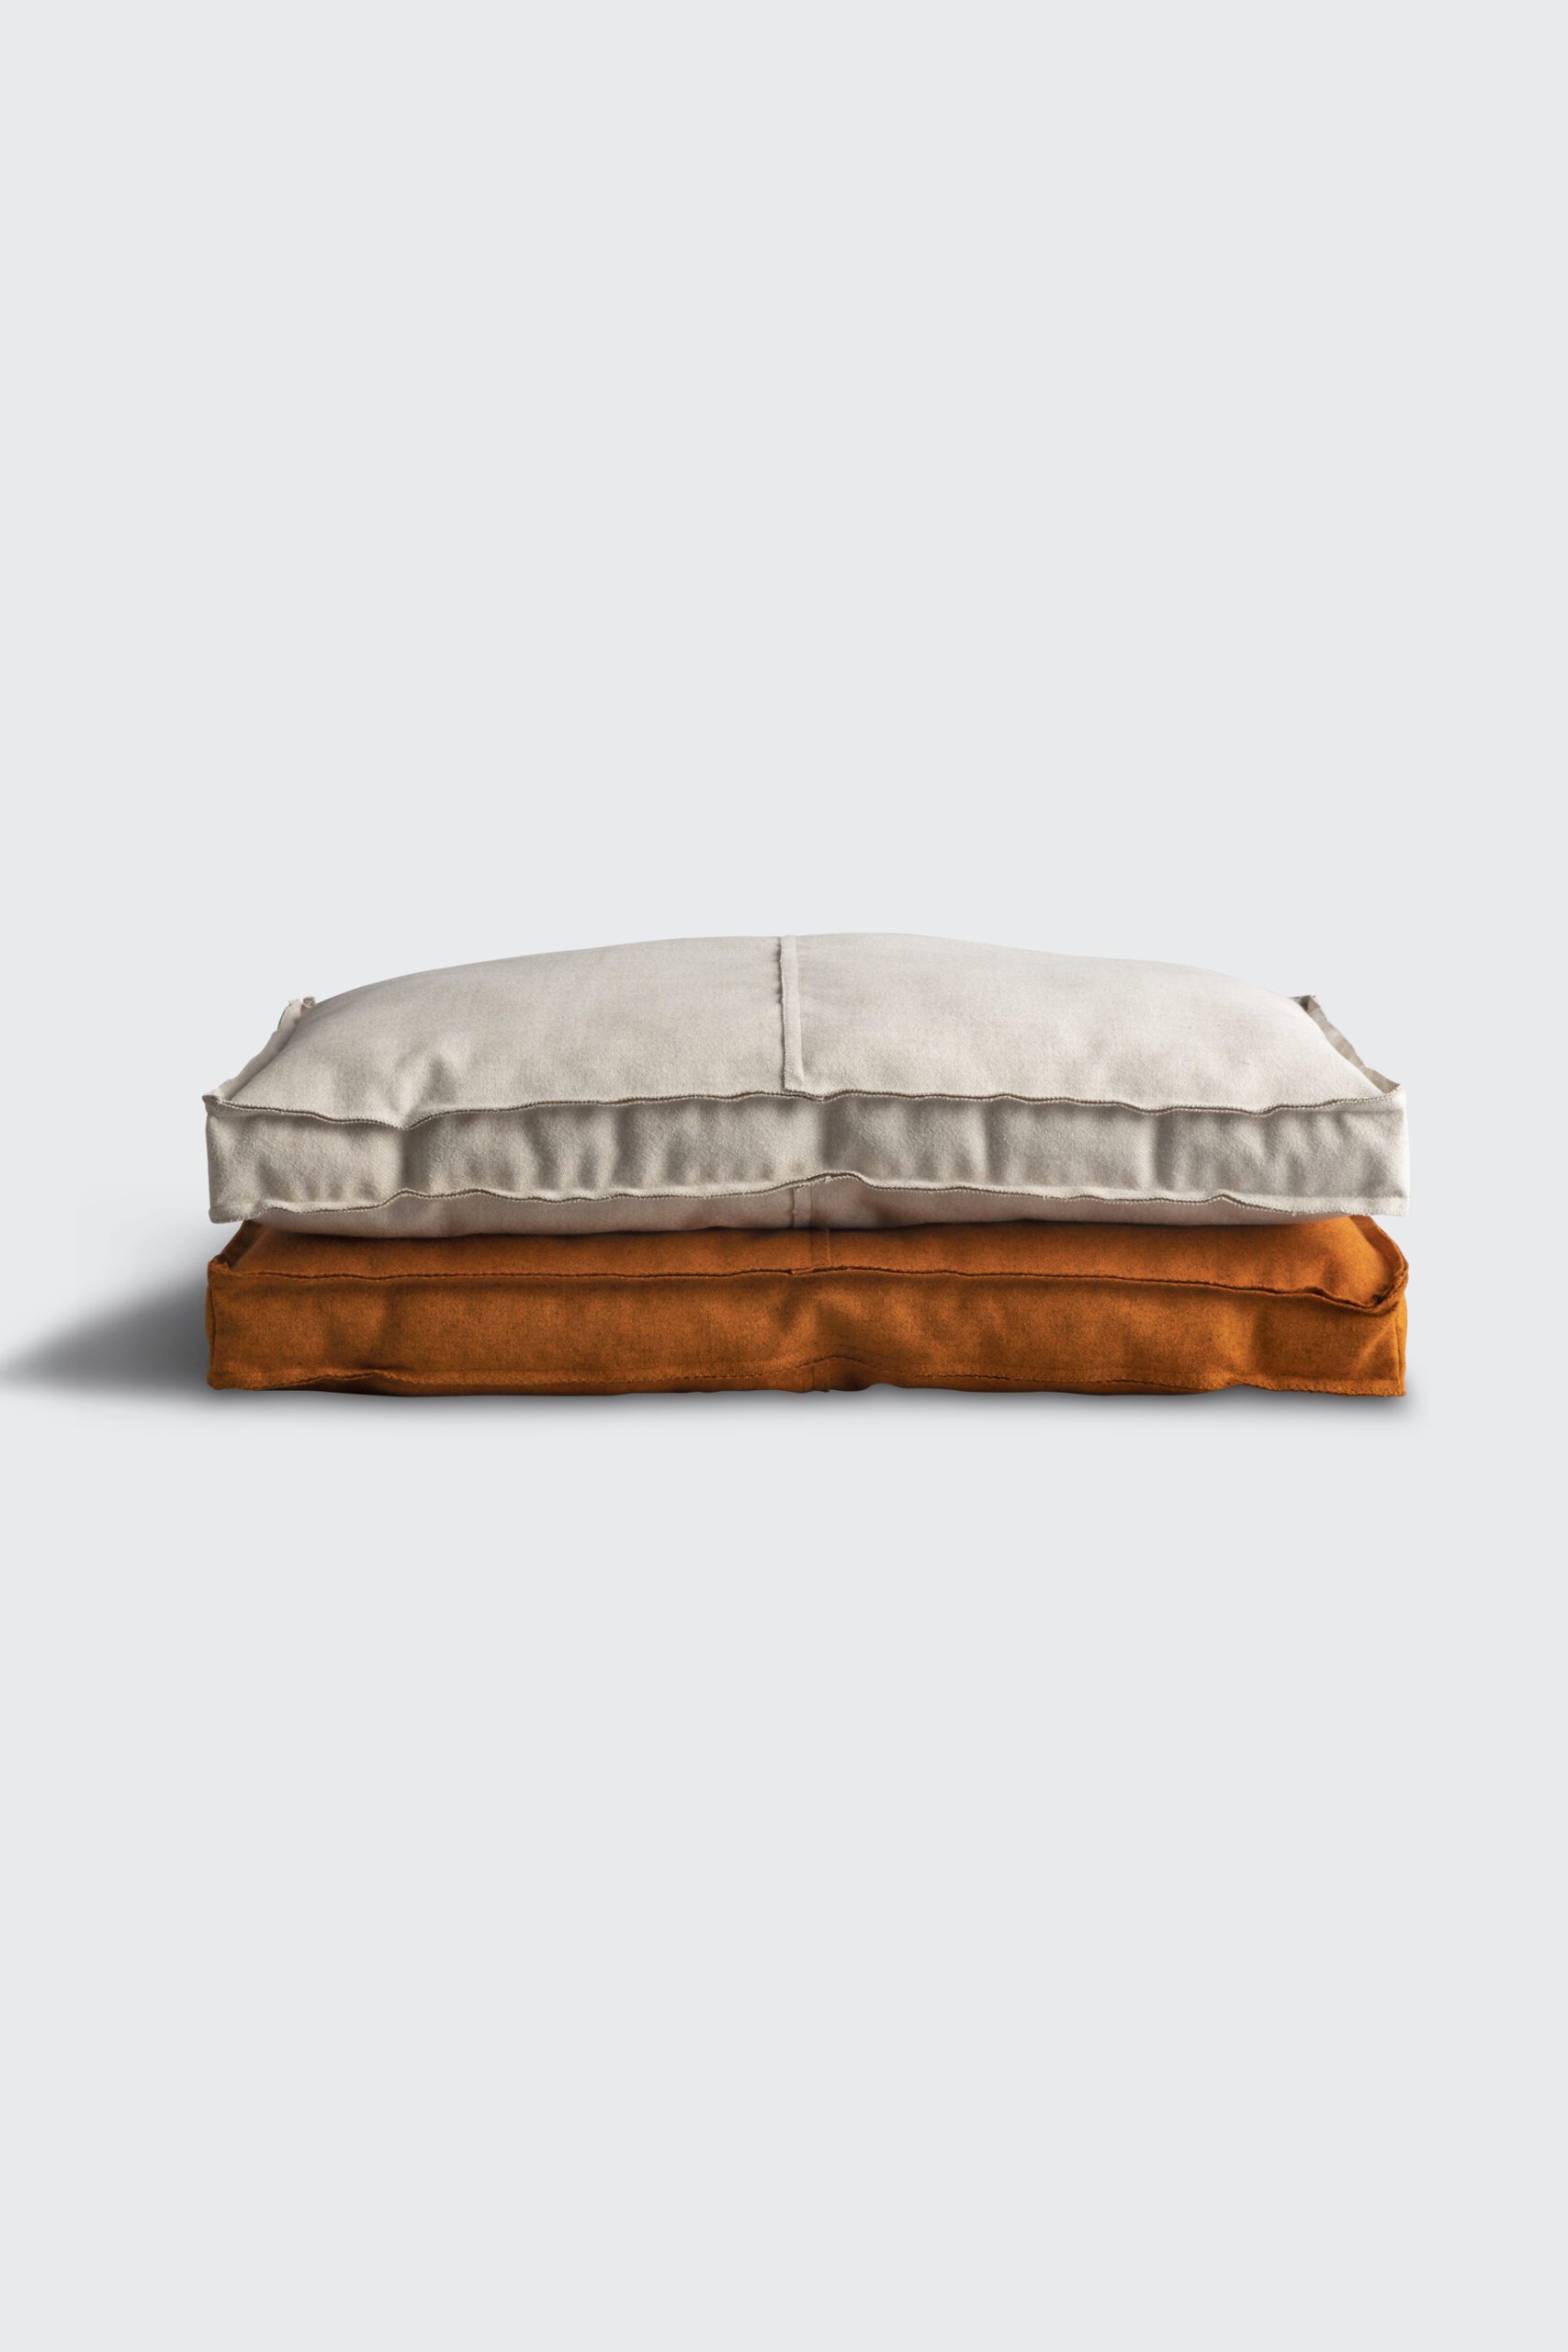 SAV mandarin set pillows interior design architecture product textiles luxury modern minimalist limited wool broadcloth 100% handmade orange blush white rectangle shape 70cmx45cm sofa look